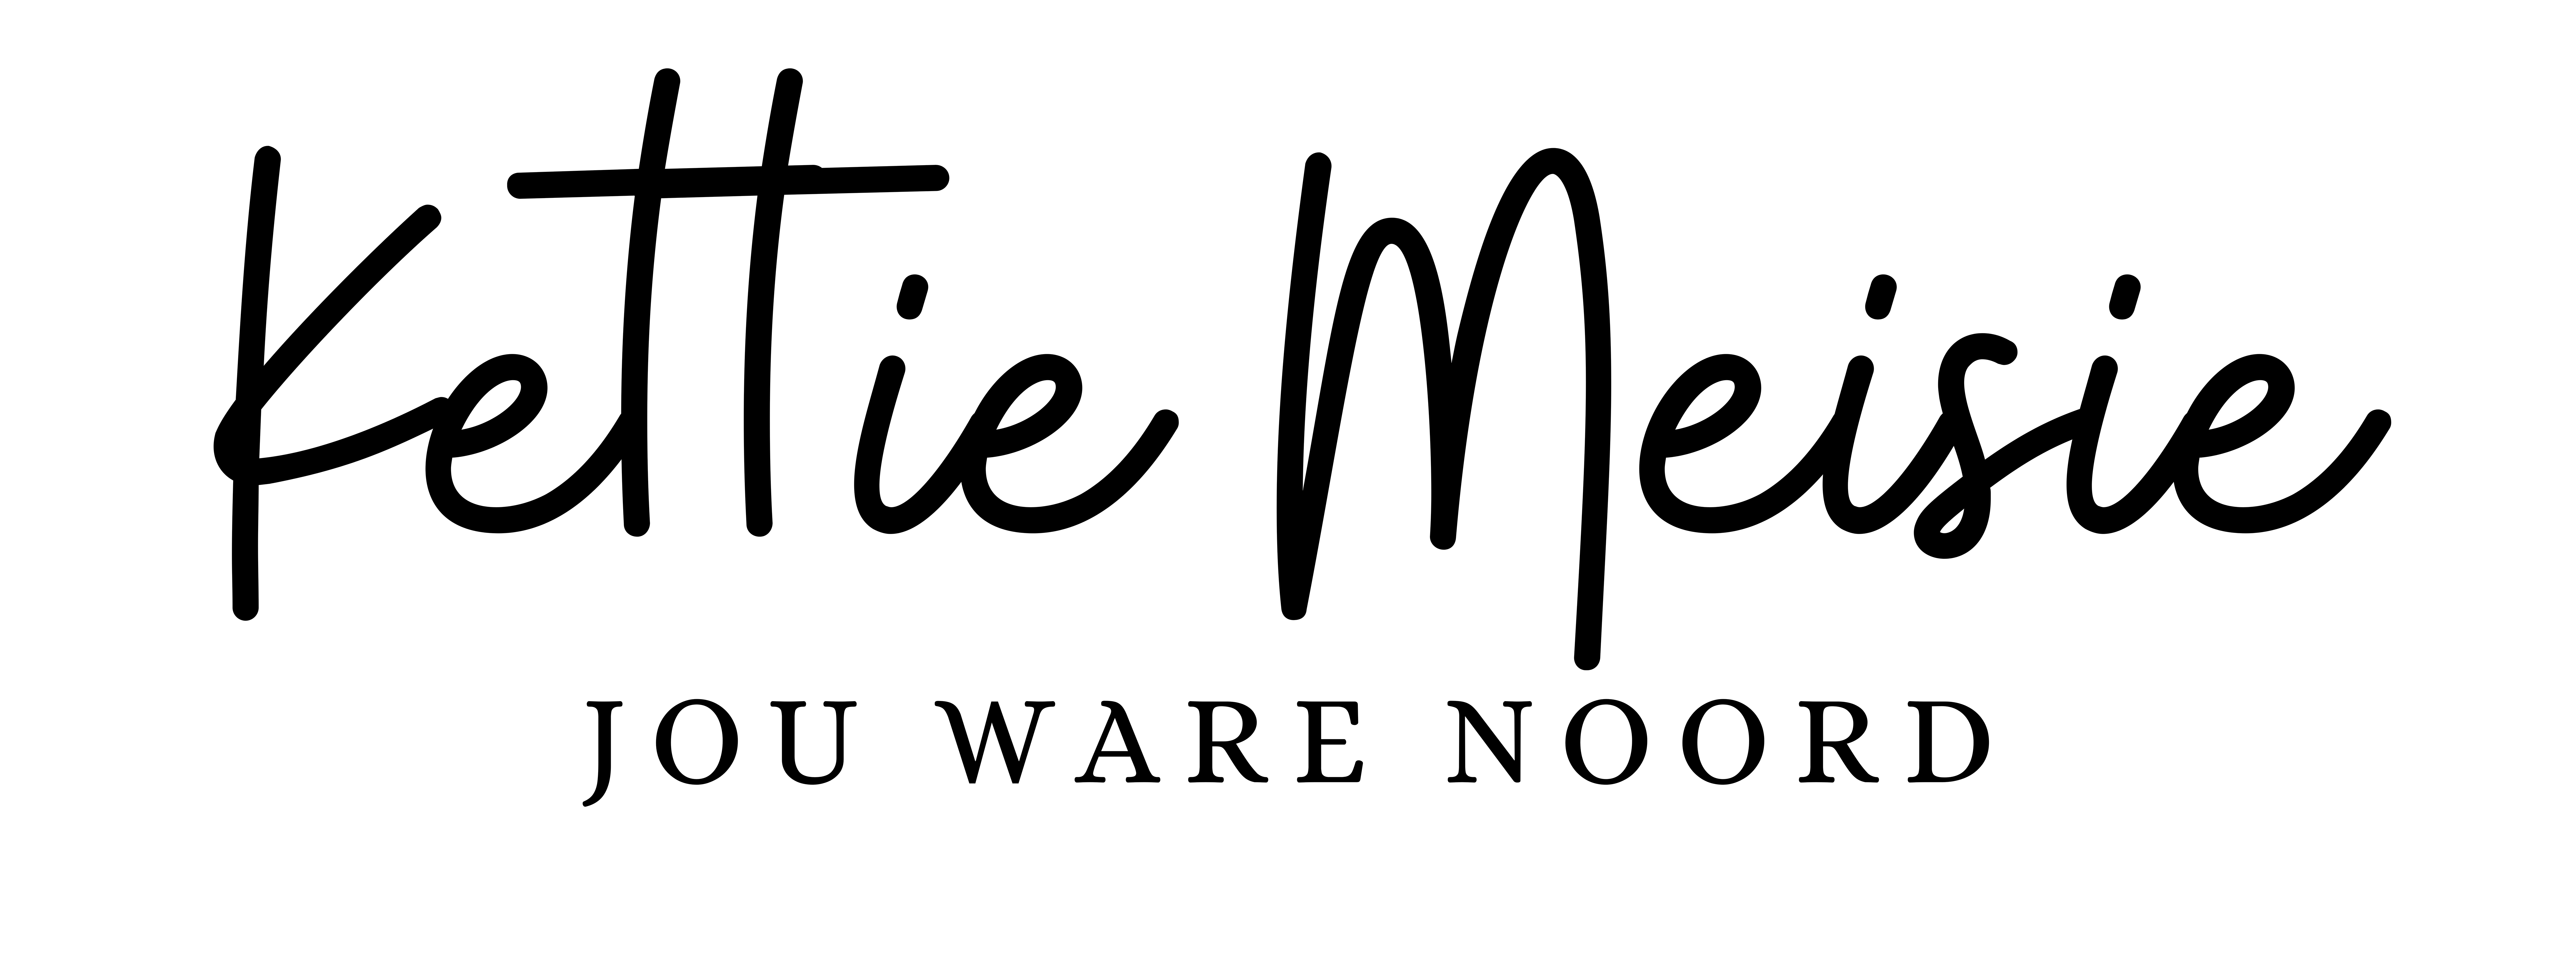 Kettie Meisie Clothing Range Logo